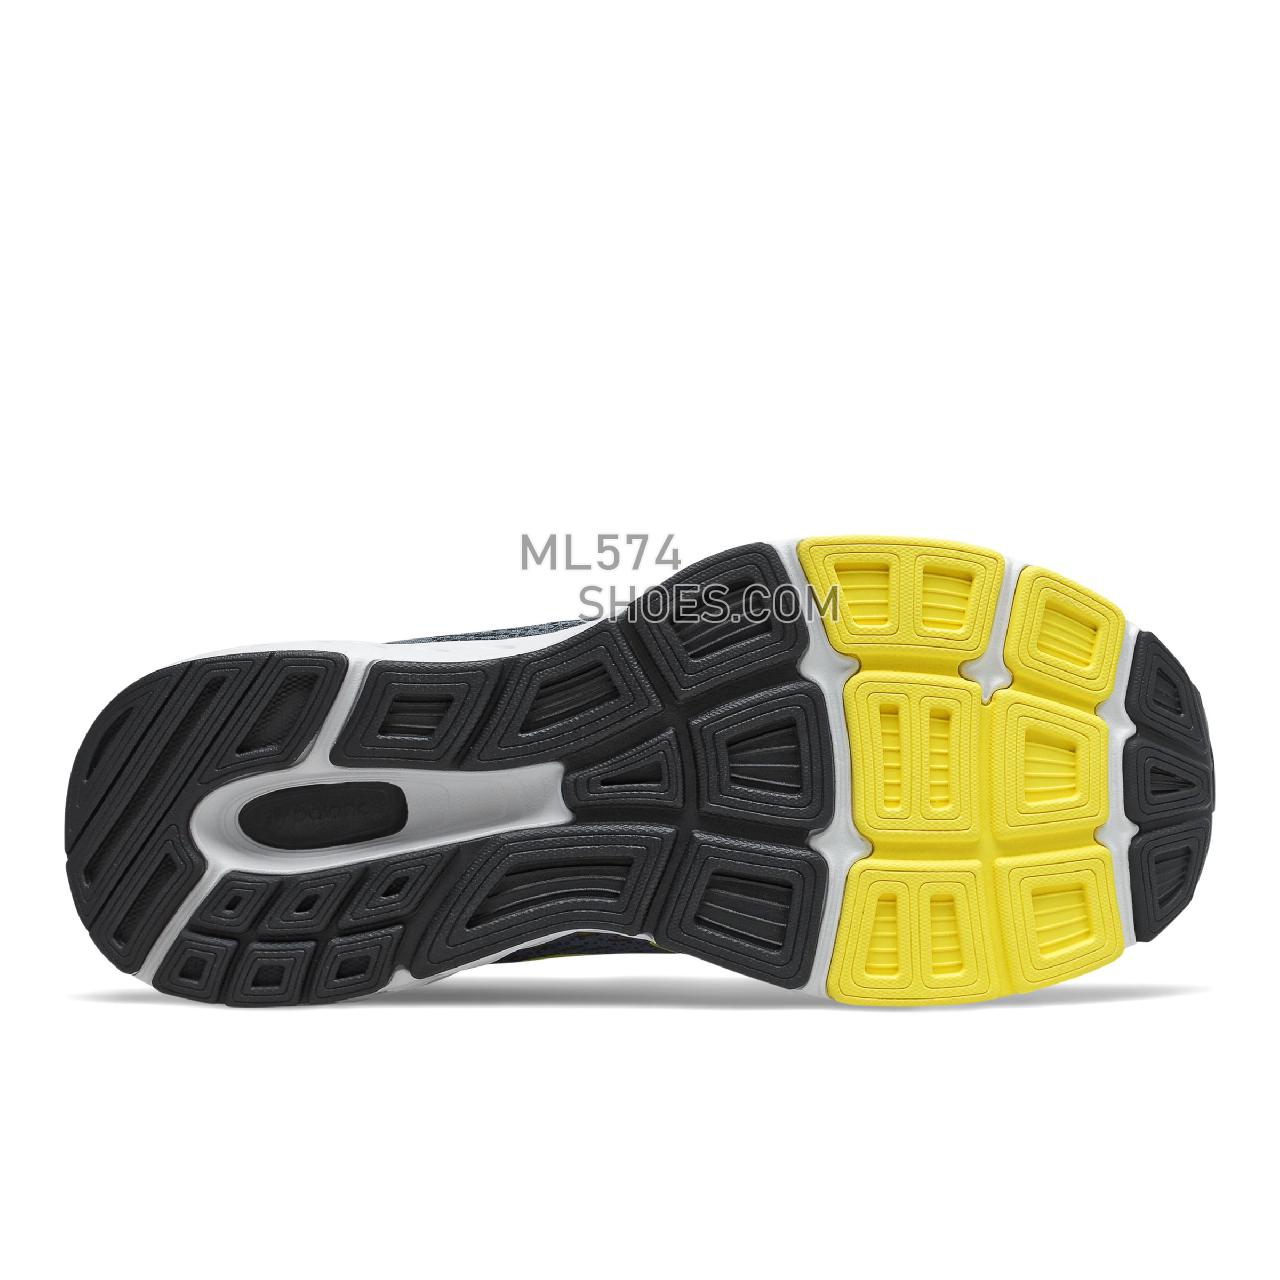 New Balance 680v6 - Men's Classic Sneakers - Grey with Black and Lemon Slush - M680RG6